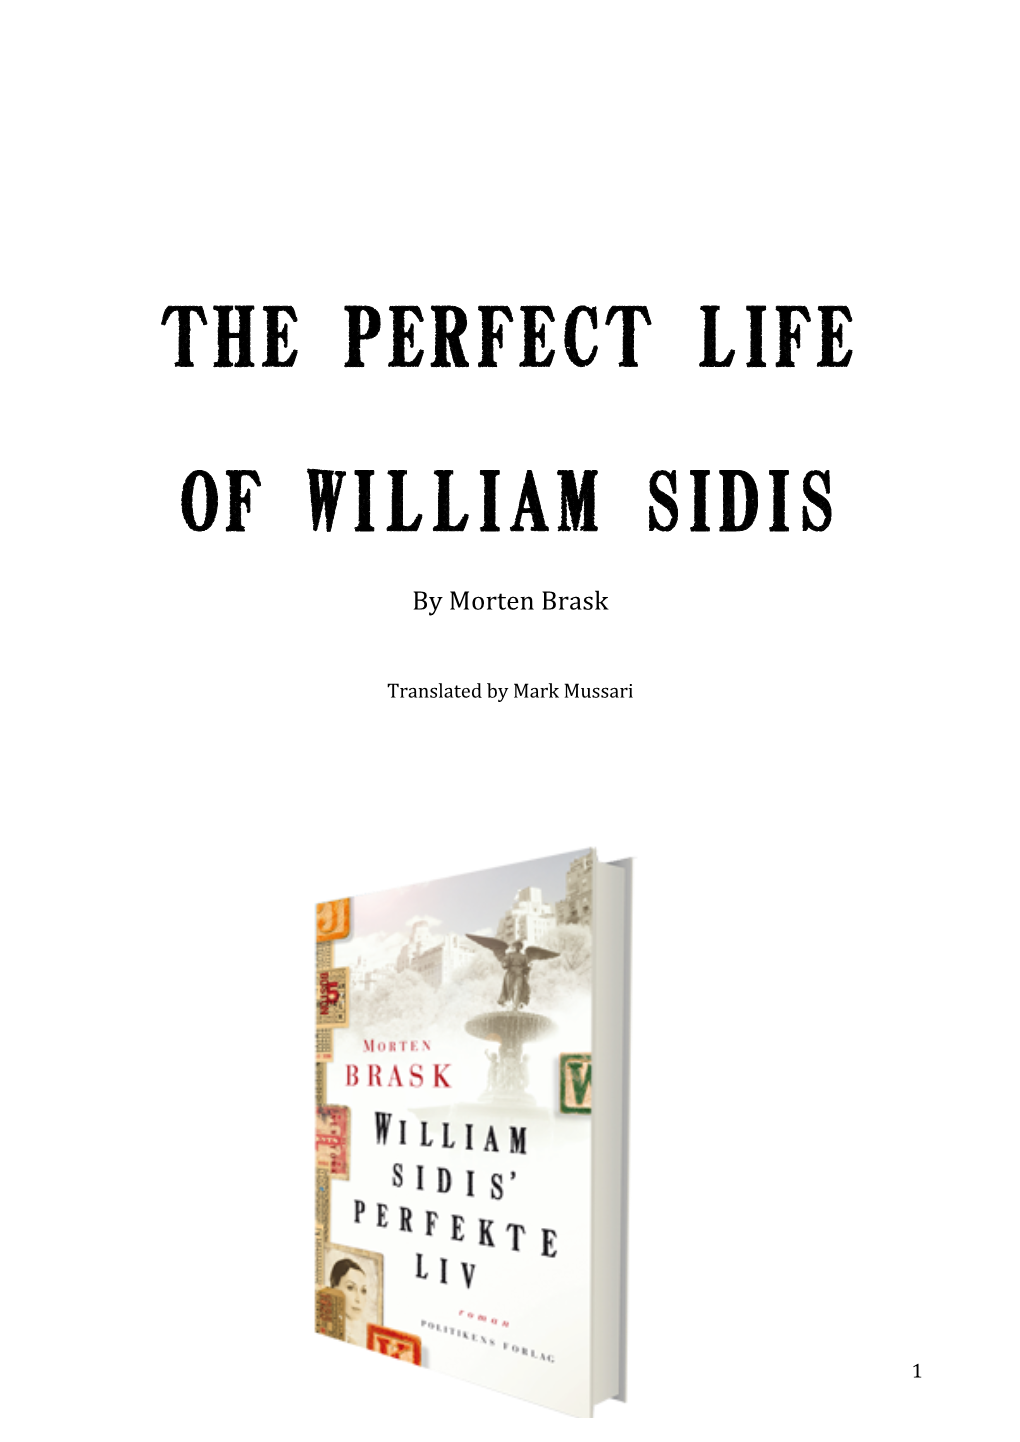 The Perfect Life of William Sidis